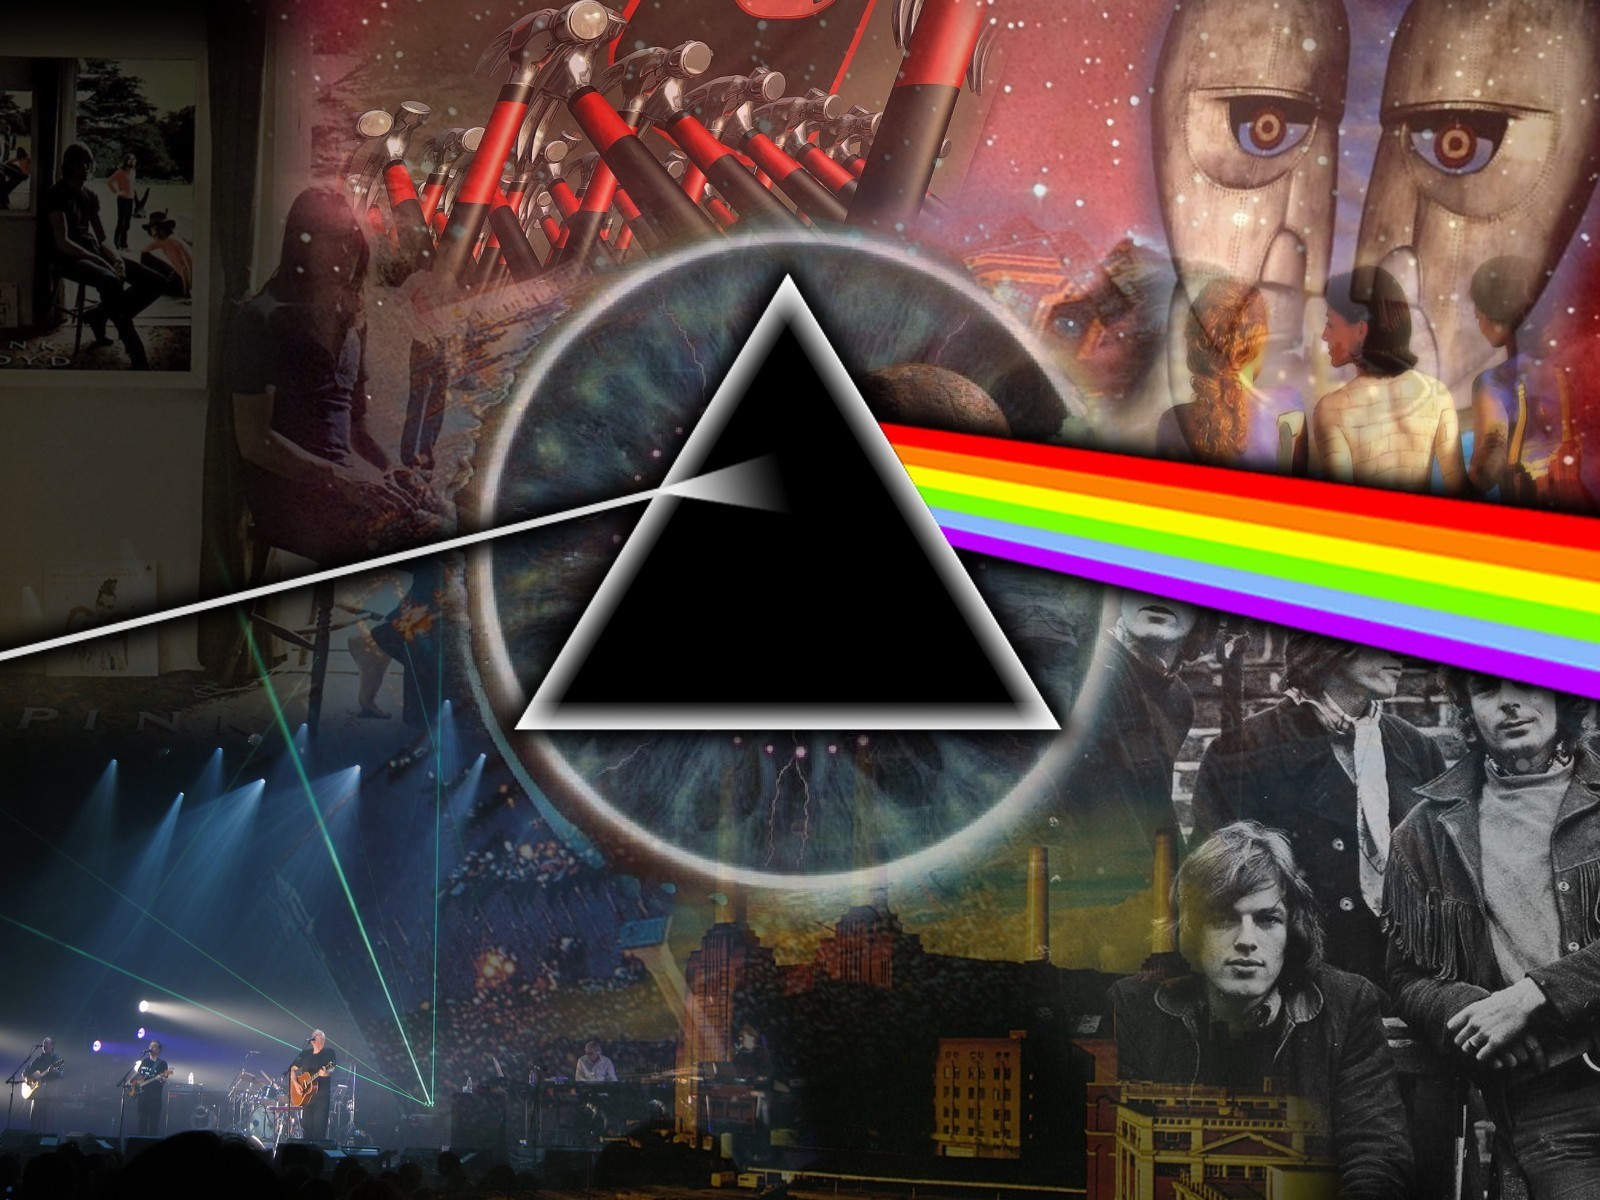 [73+] Pink Floyd Desktop Wallpaper on WallpaperSafari